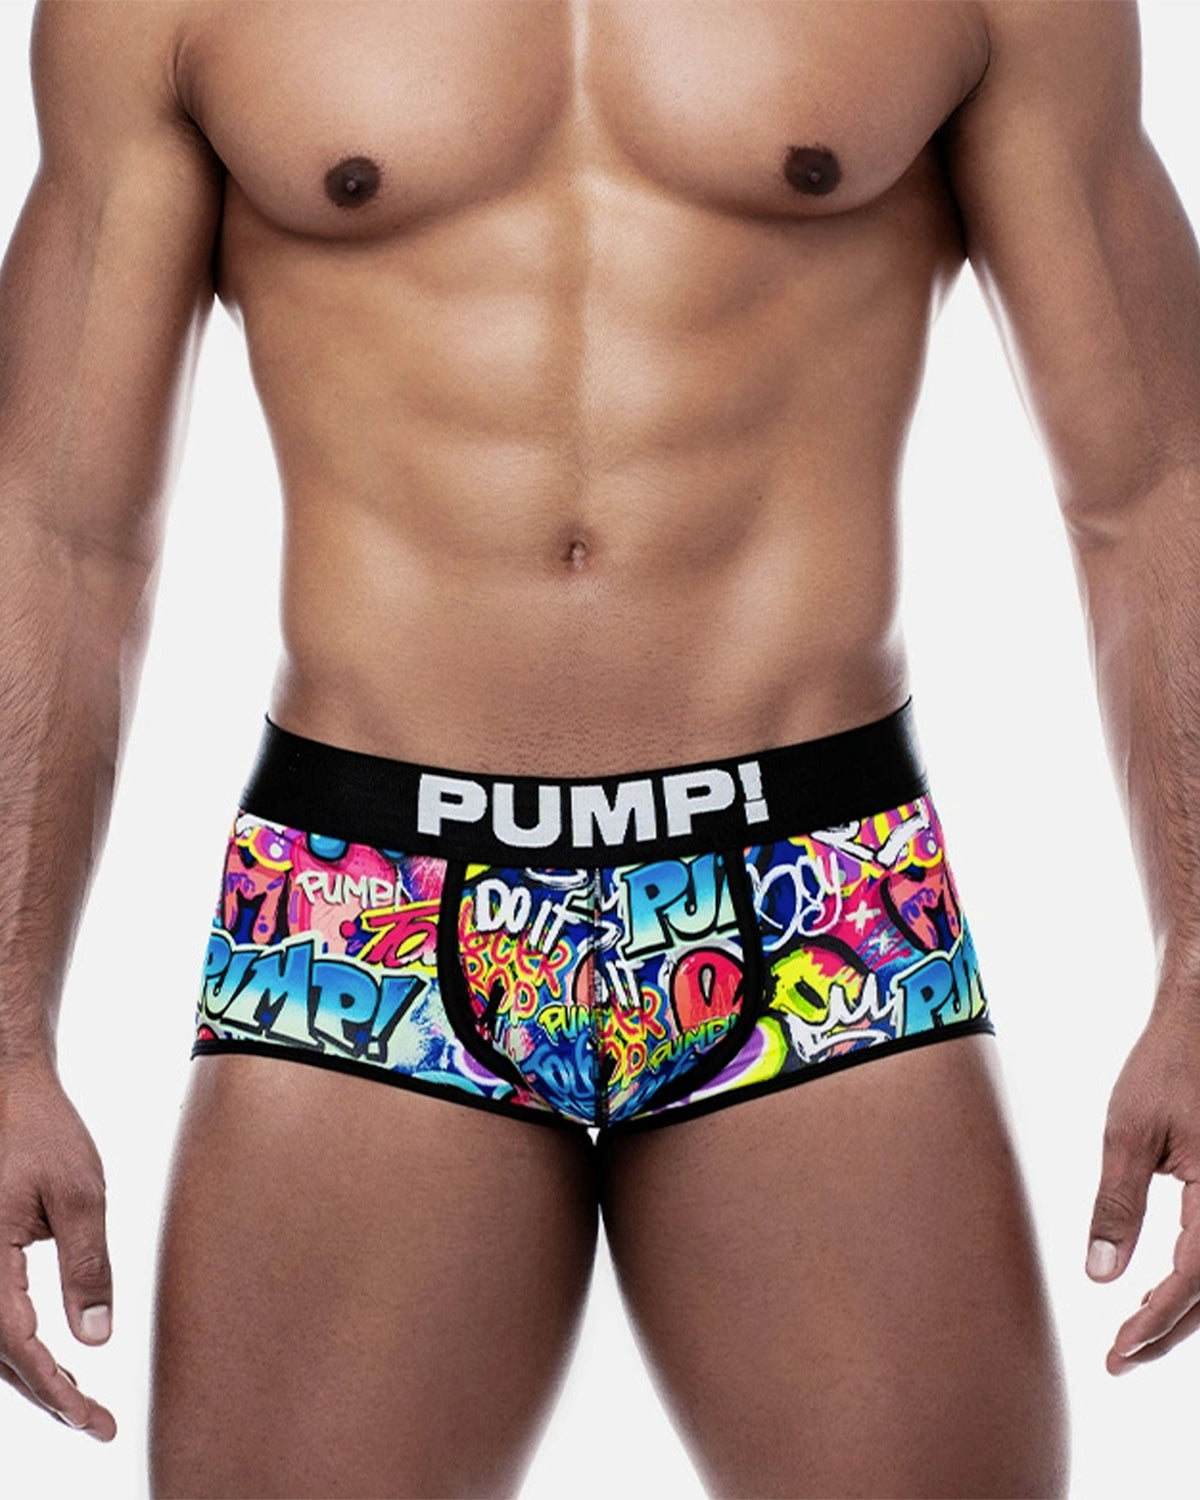 PUMP Underwear - Hands up to those who prefer to walk around home